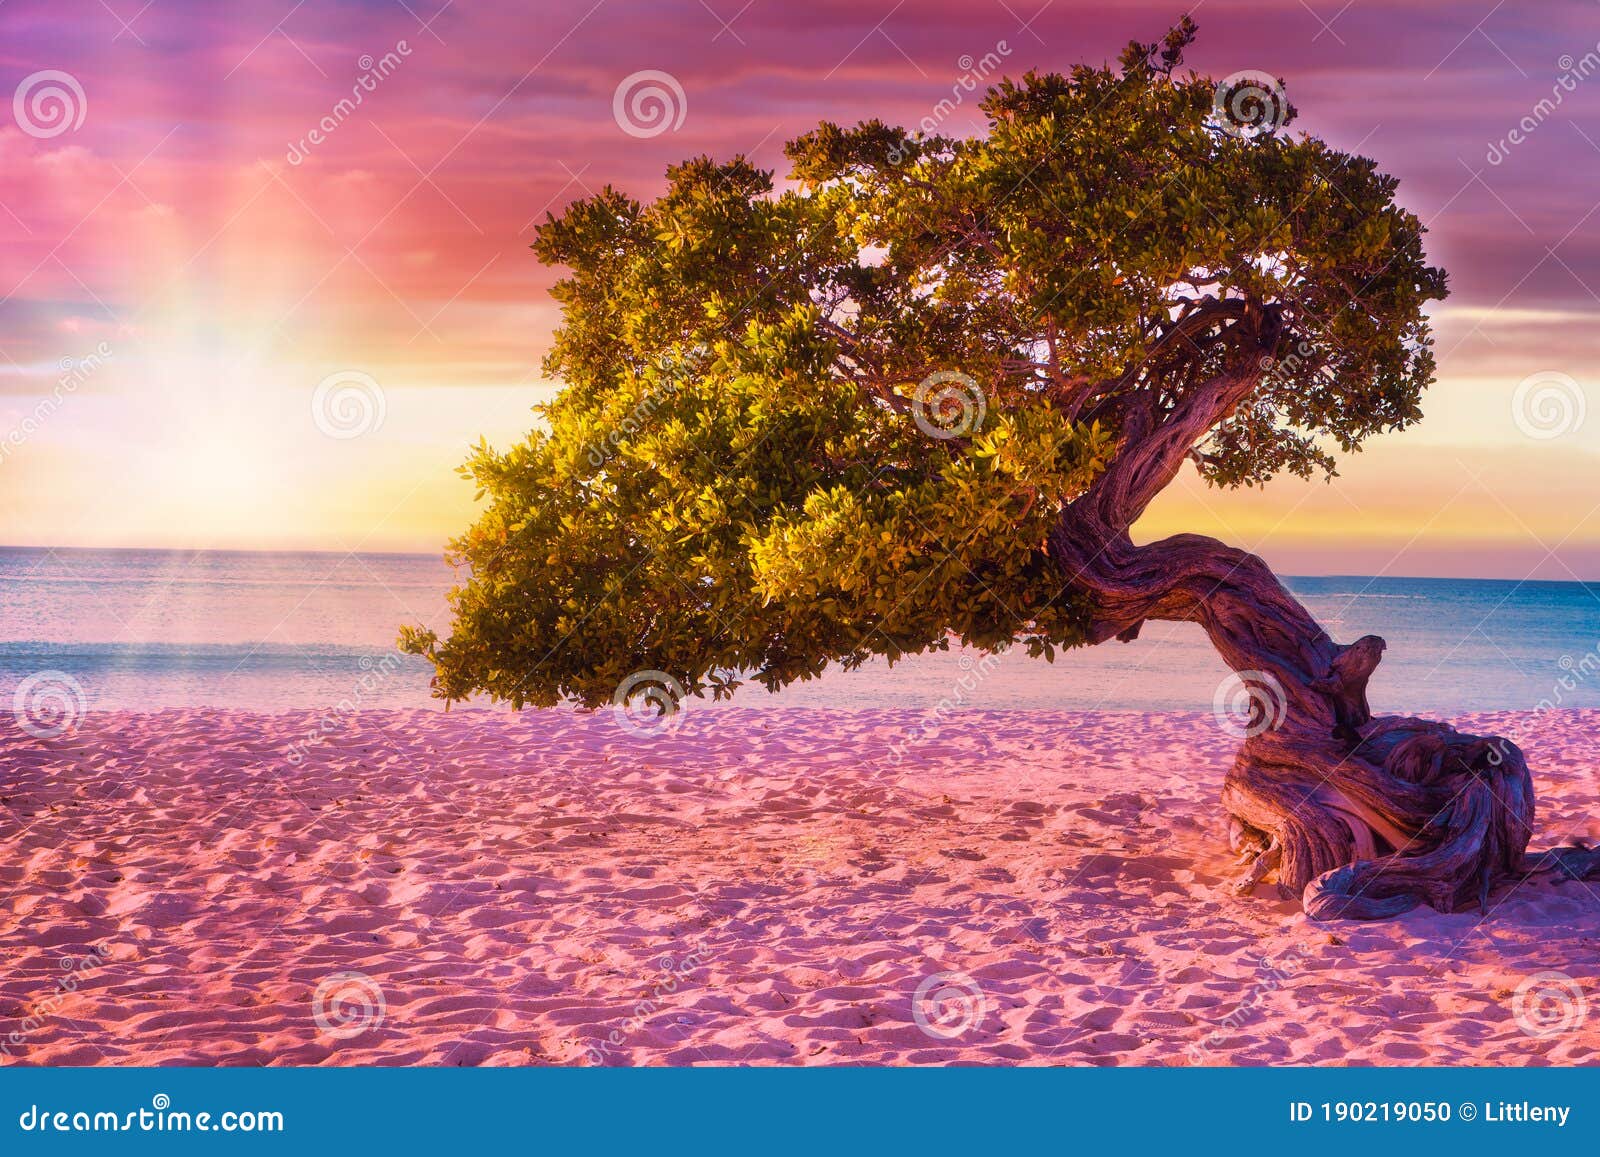 divi divi tree on eagle beach in aruba at sunset.